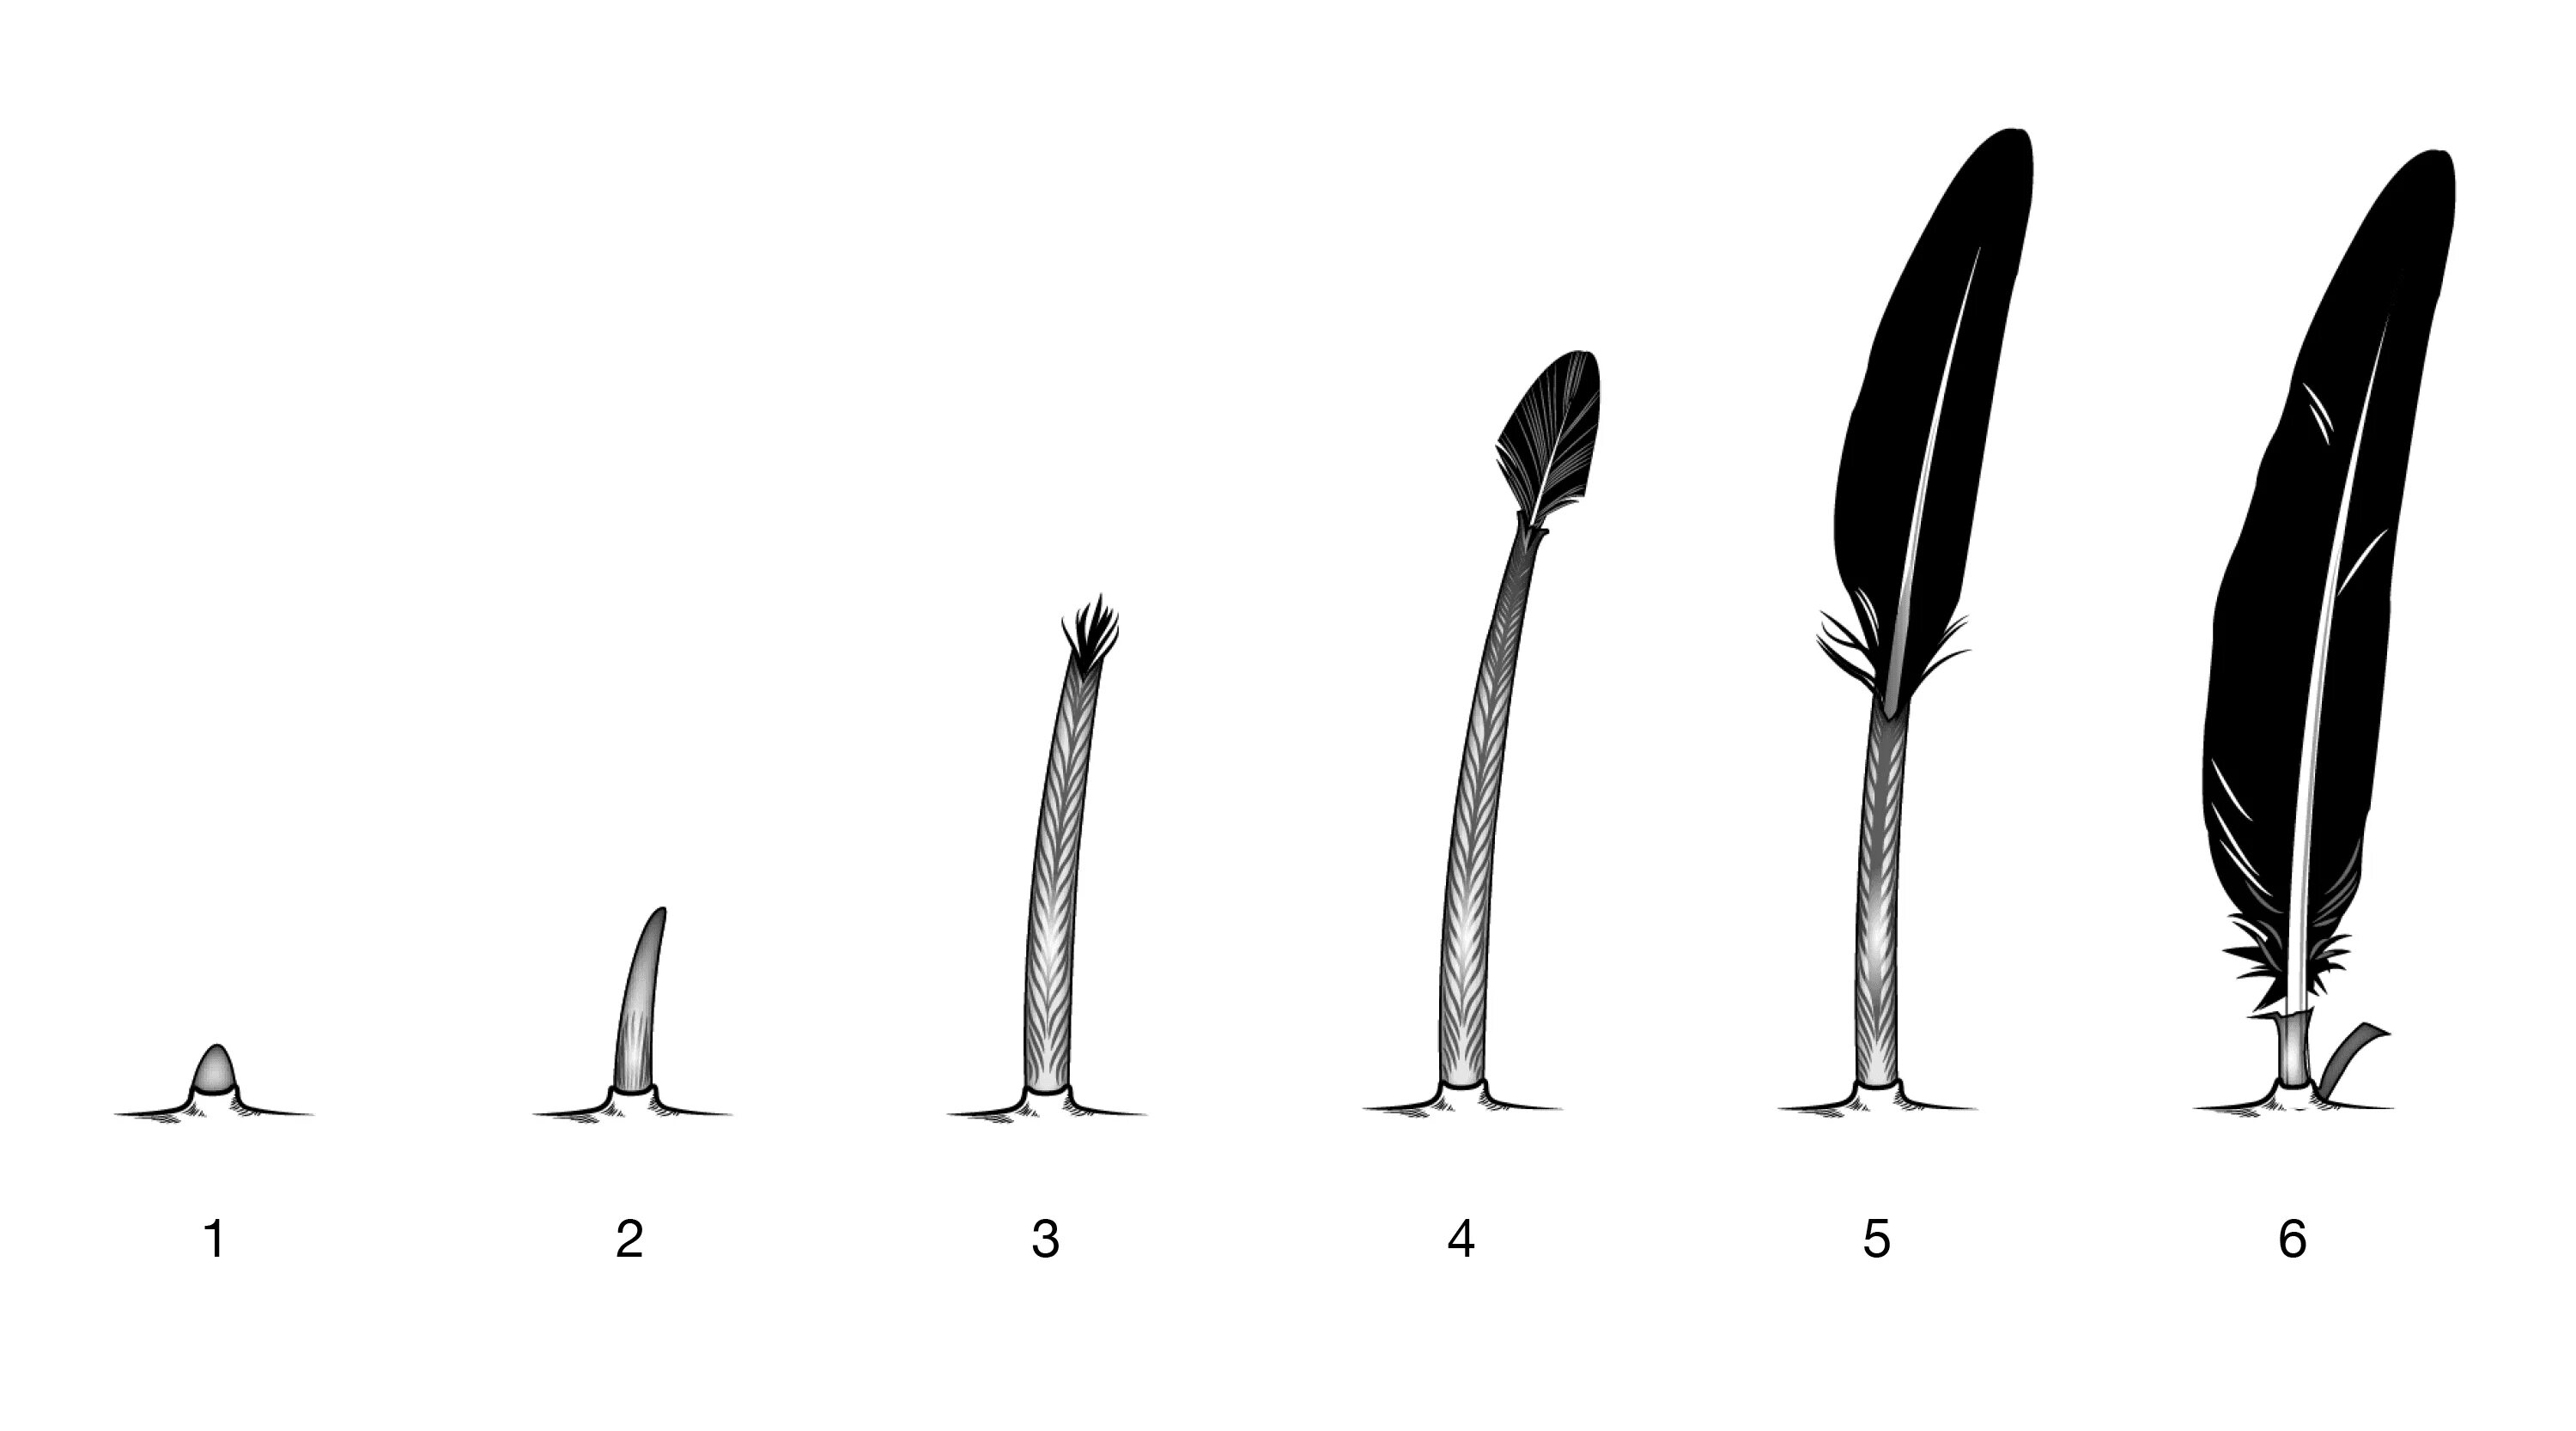 Длина пера